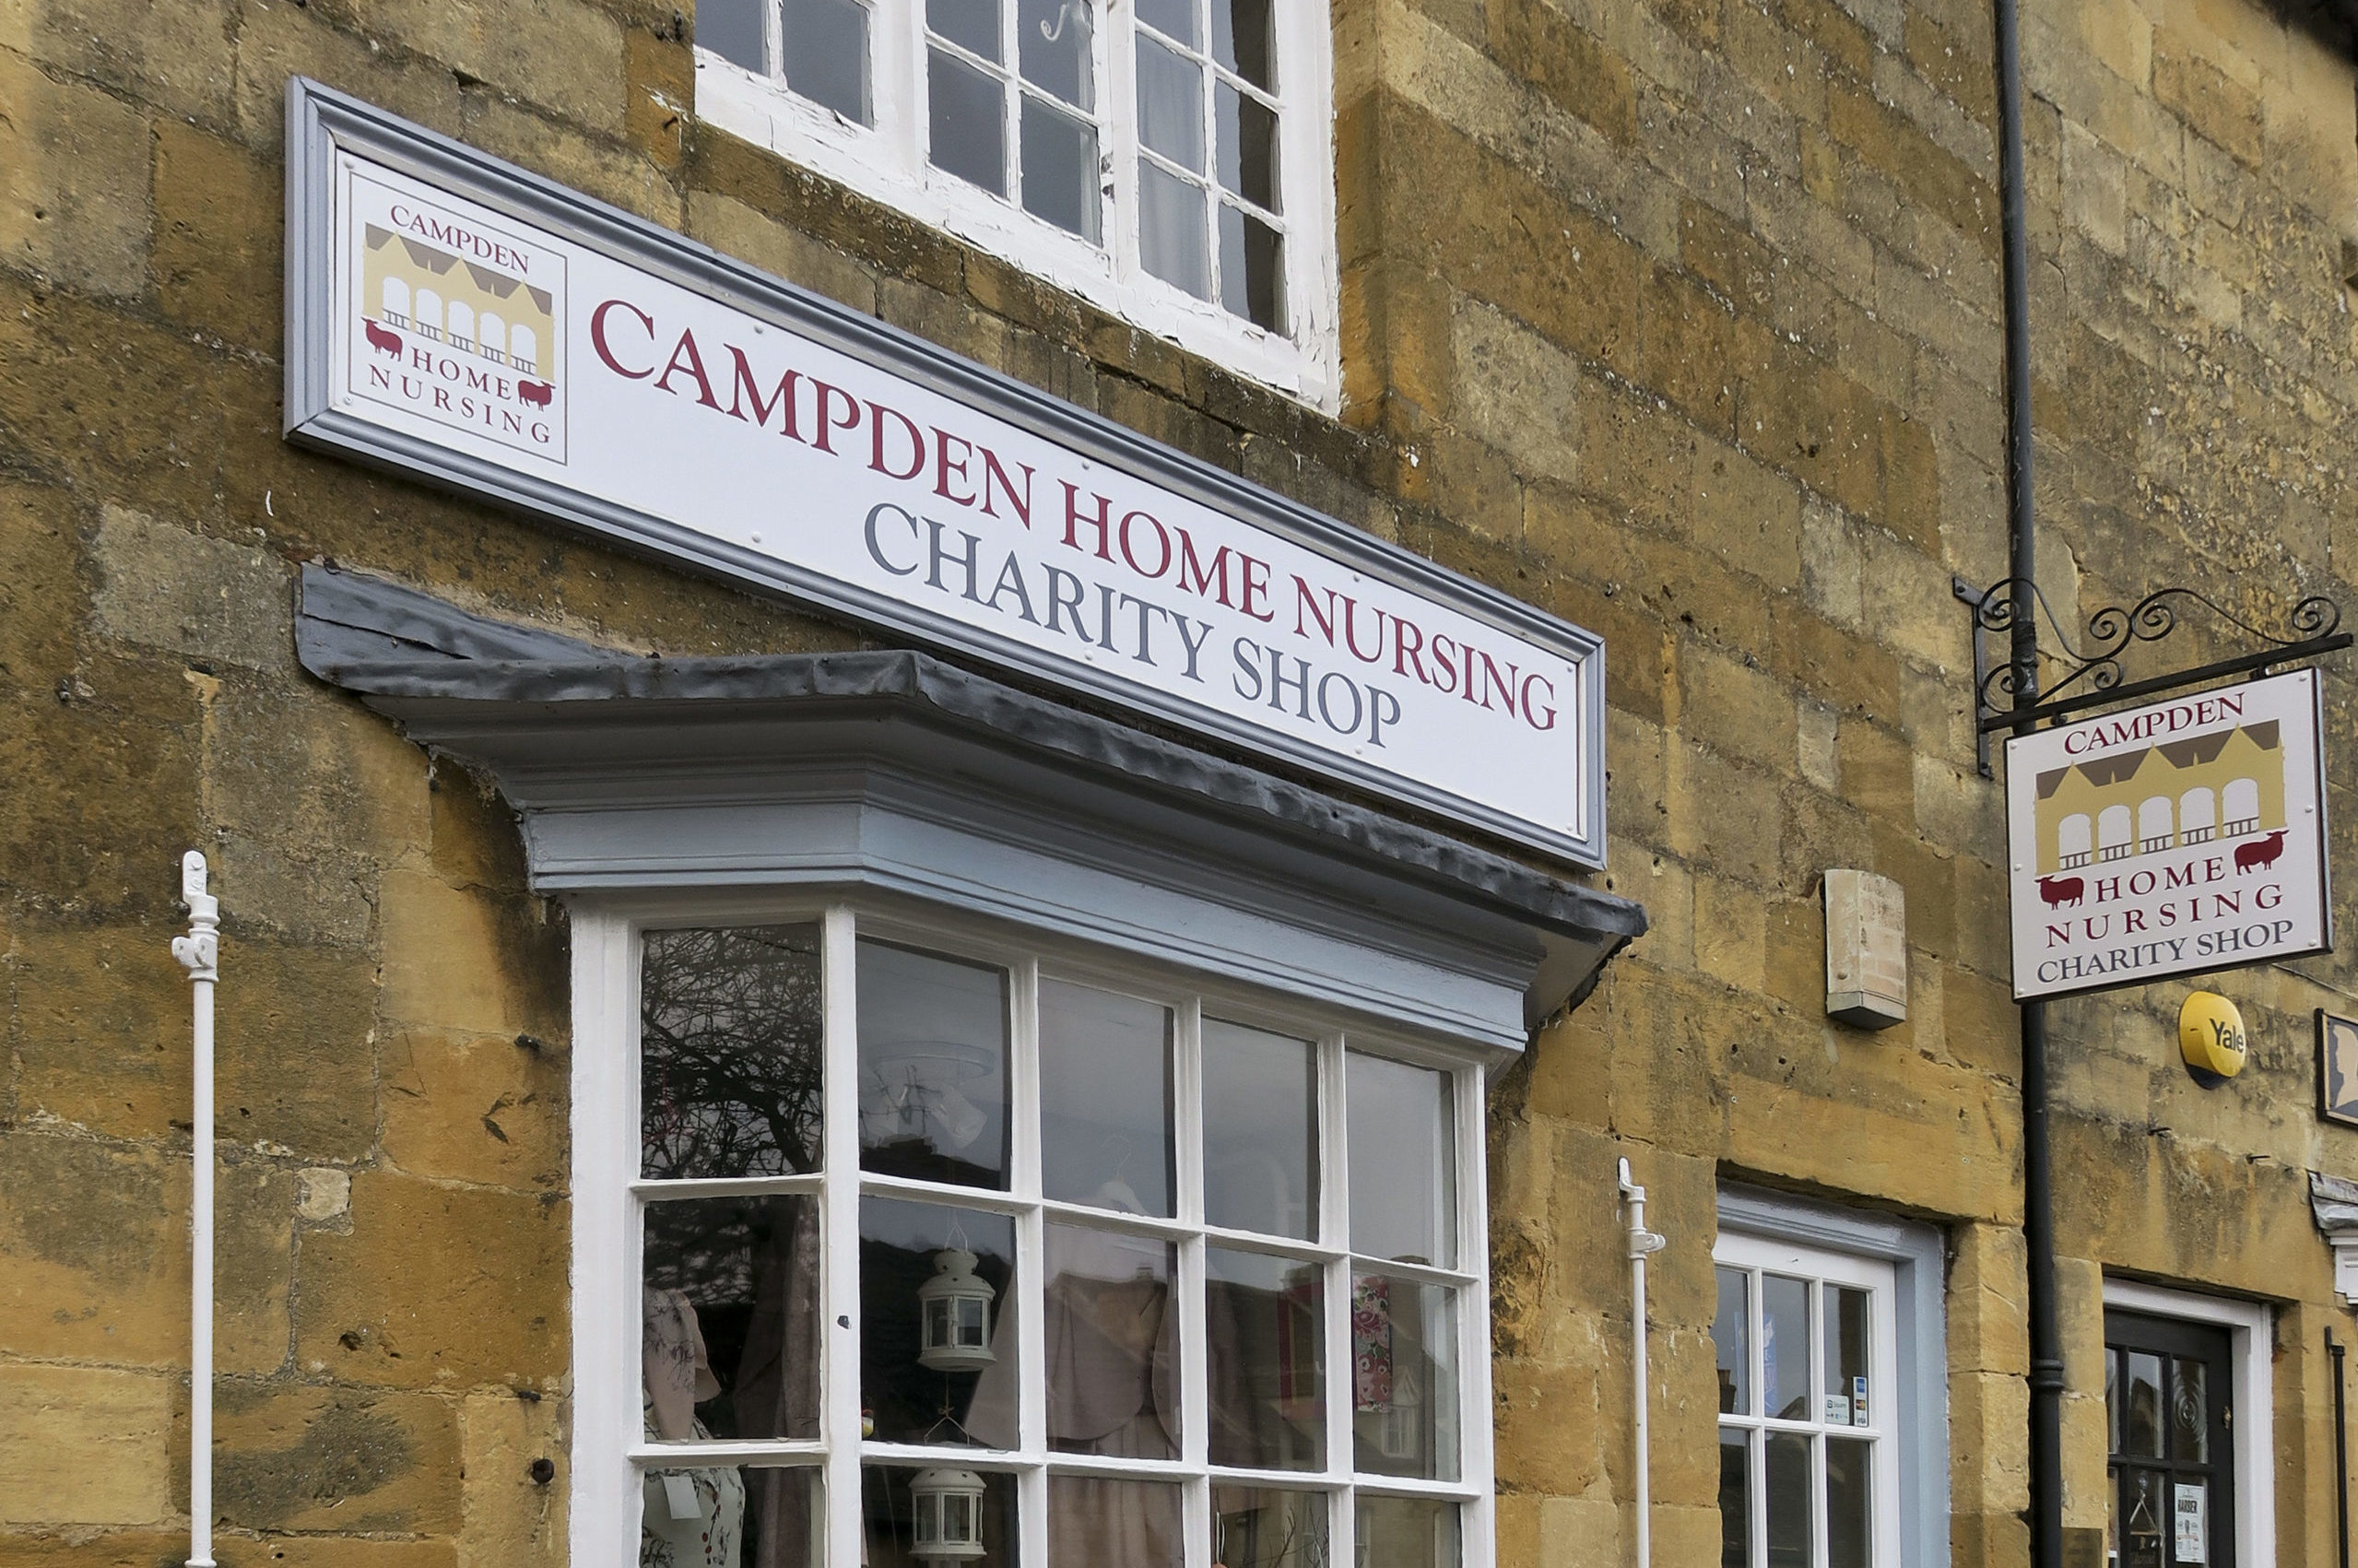 Campden Home Nursing Charity Shop